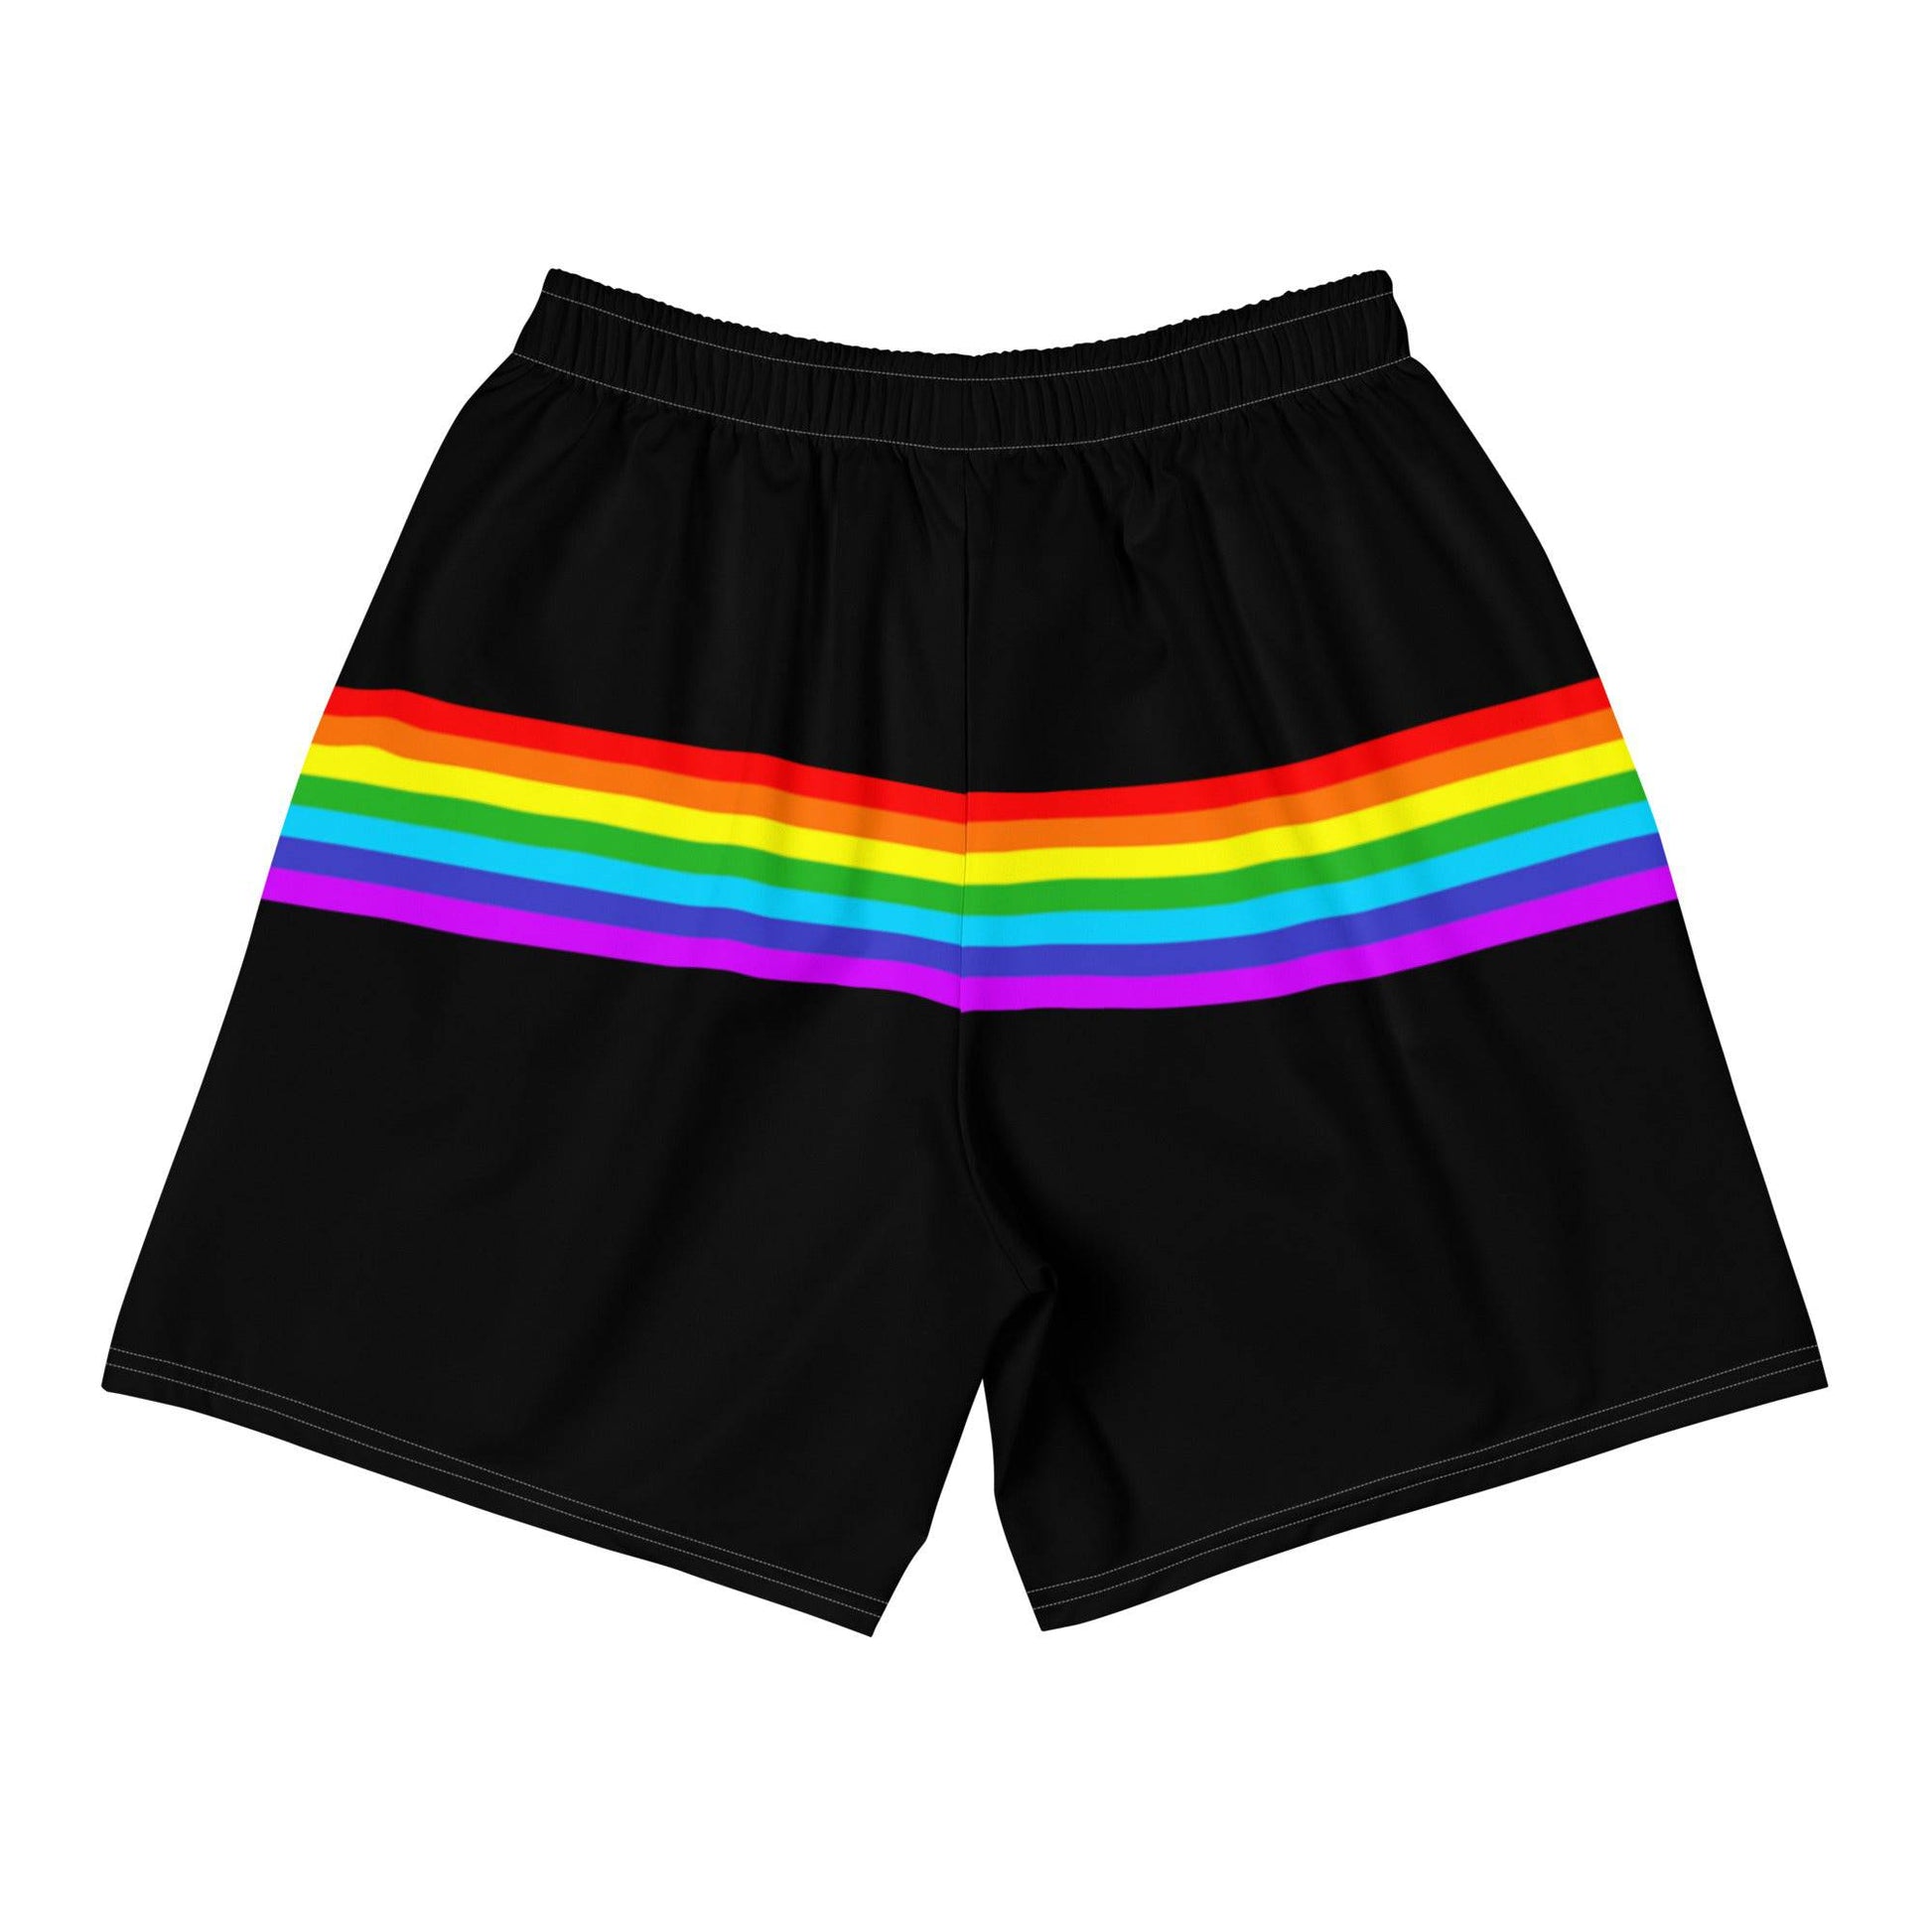 Rainbow Stripe Pride Shorts in Black - Rose Gold Co. Shop